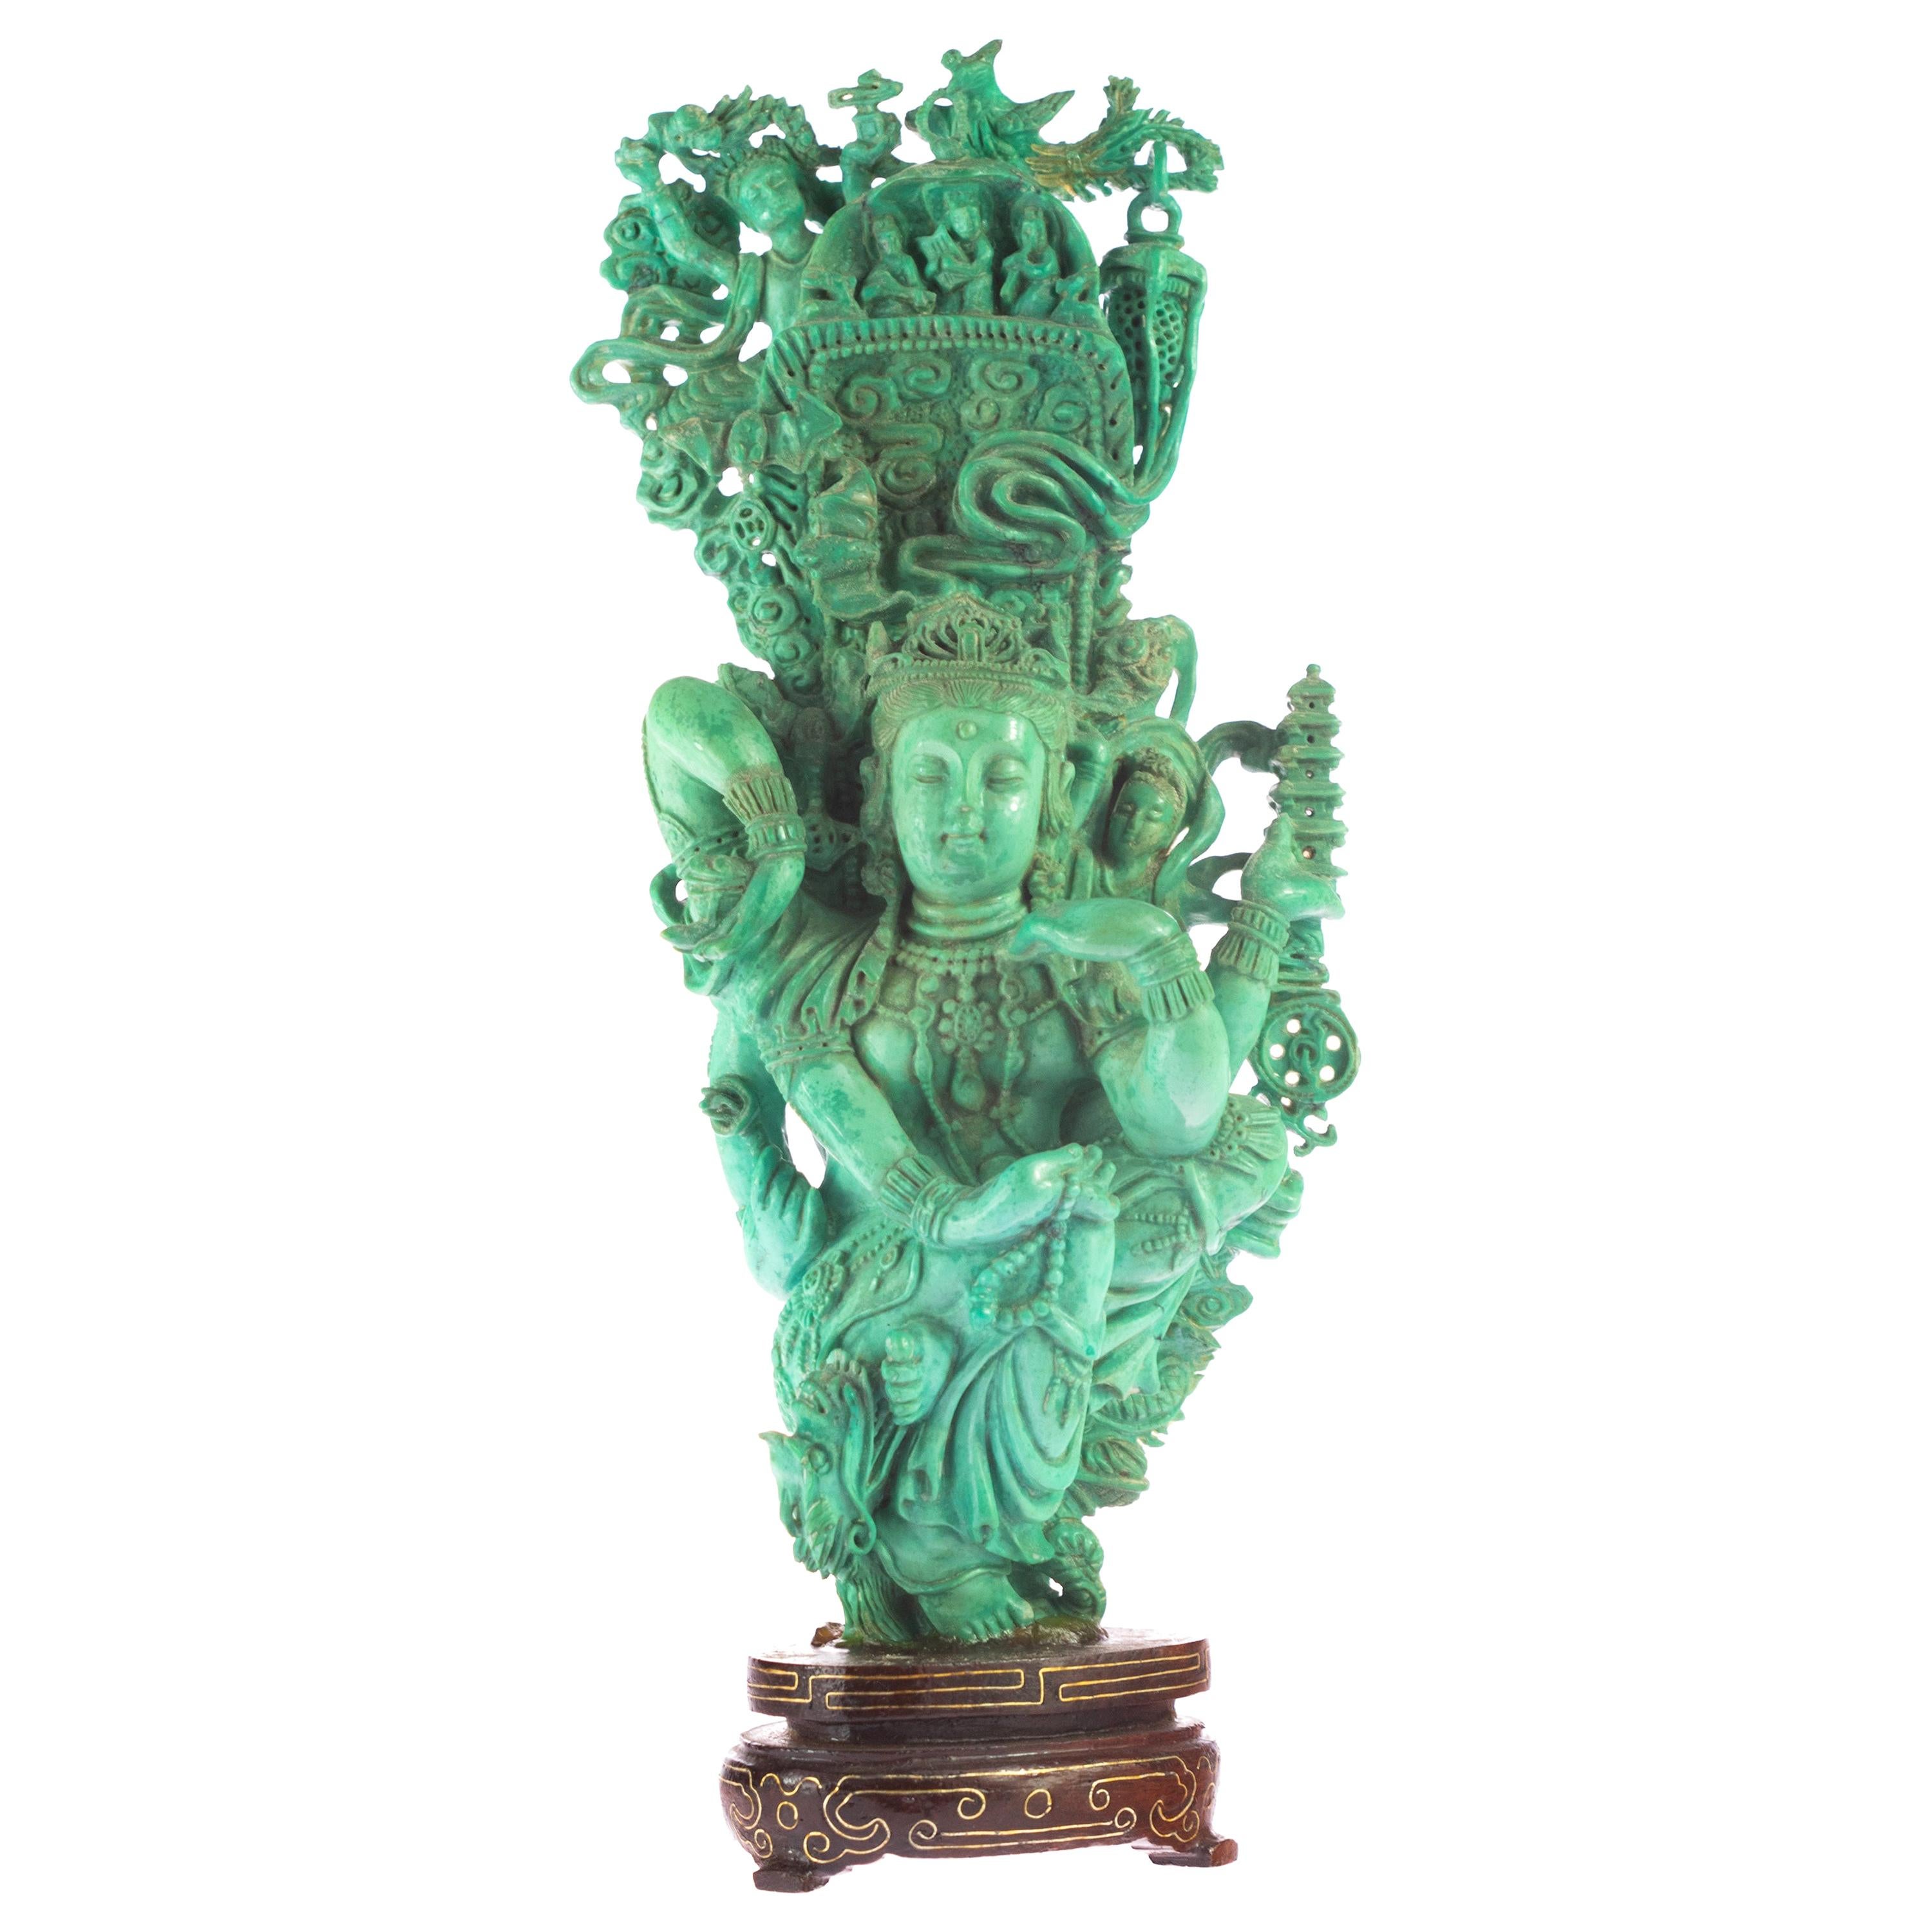 Turquoise Guanyin Bodhisattva Female Buddha Asian Art Carved Statue Sculpture